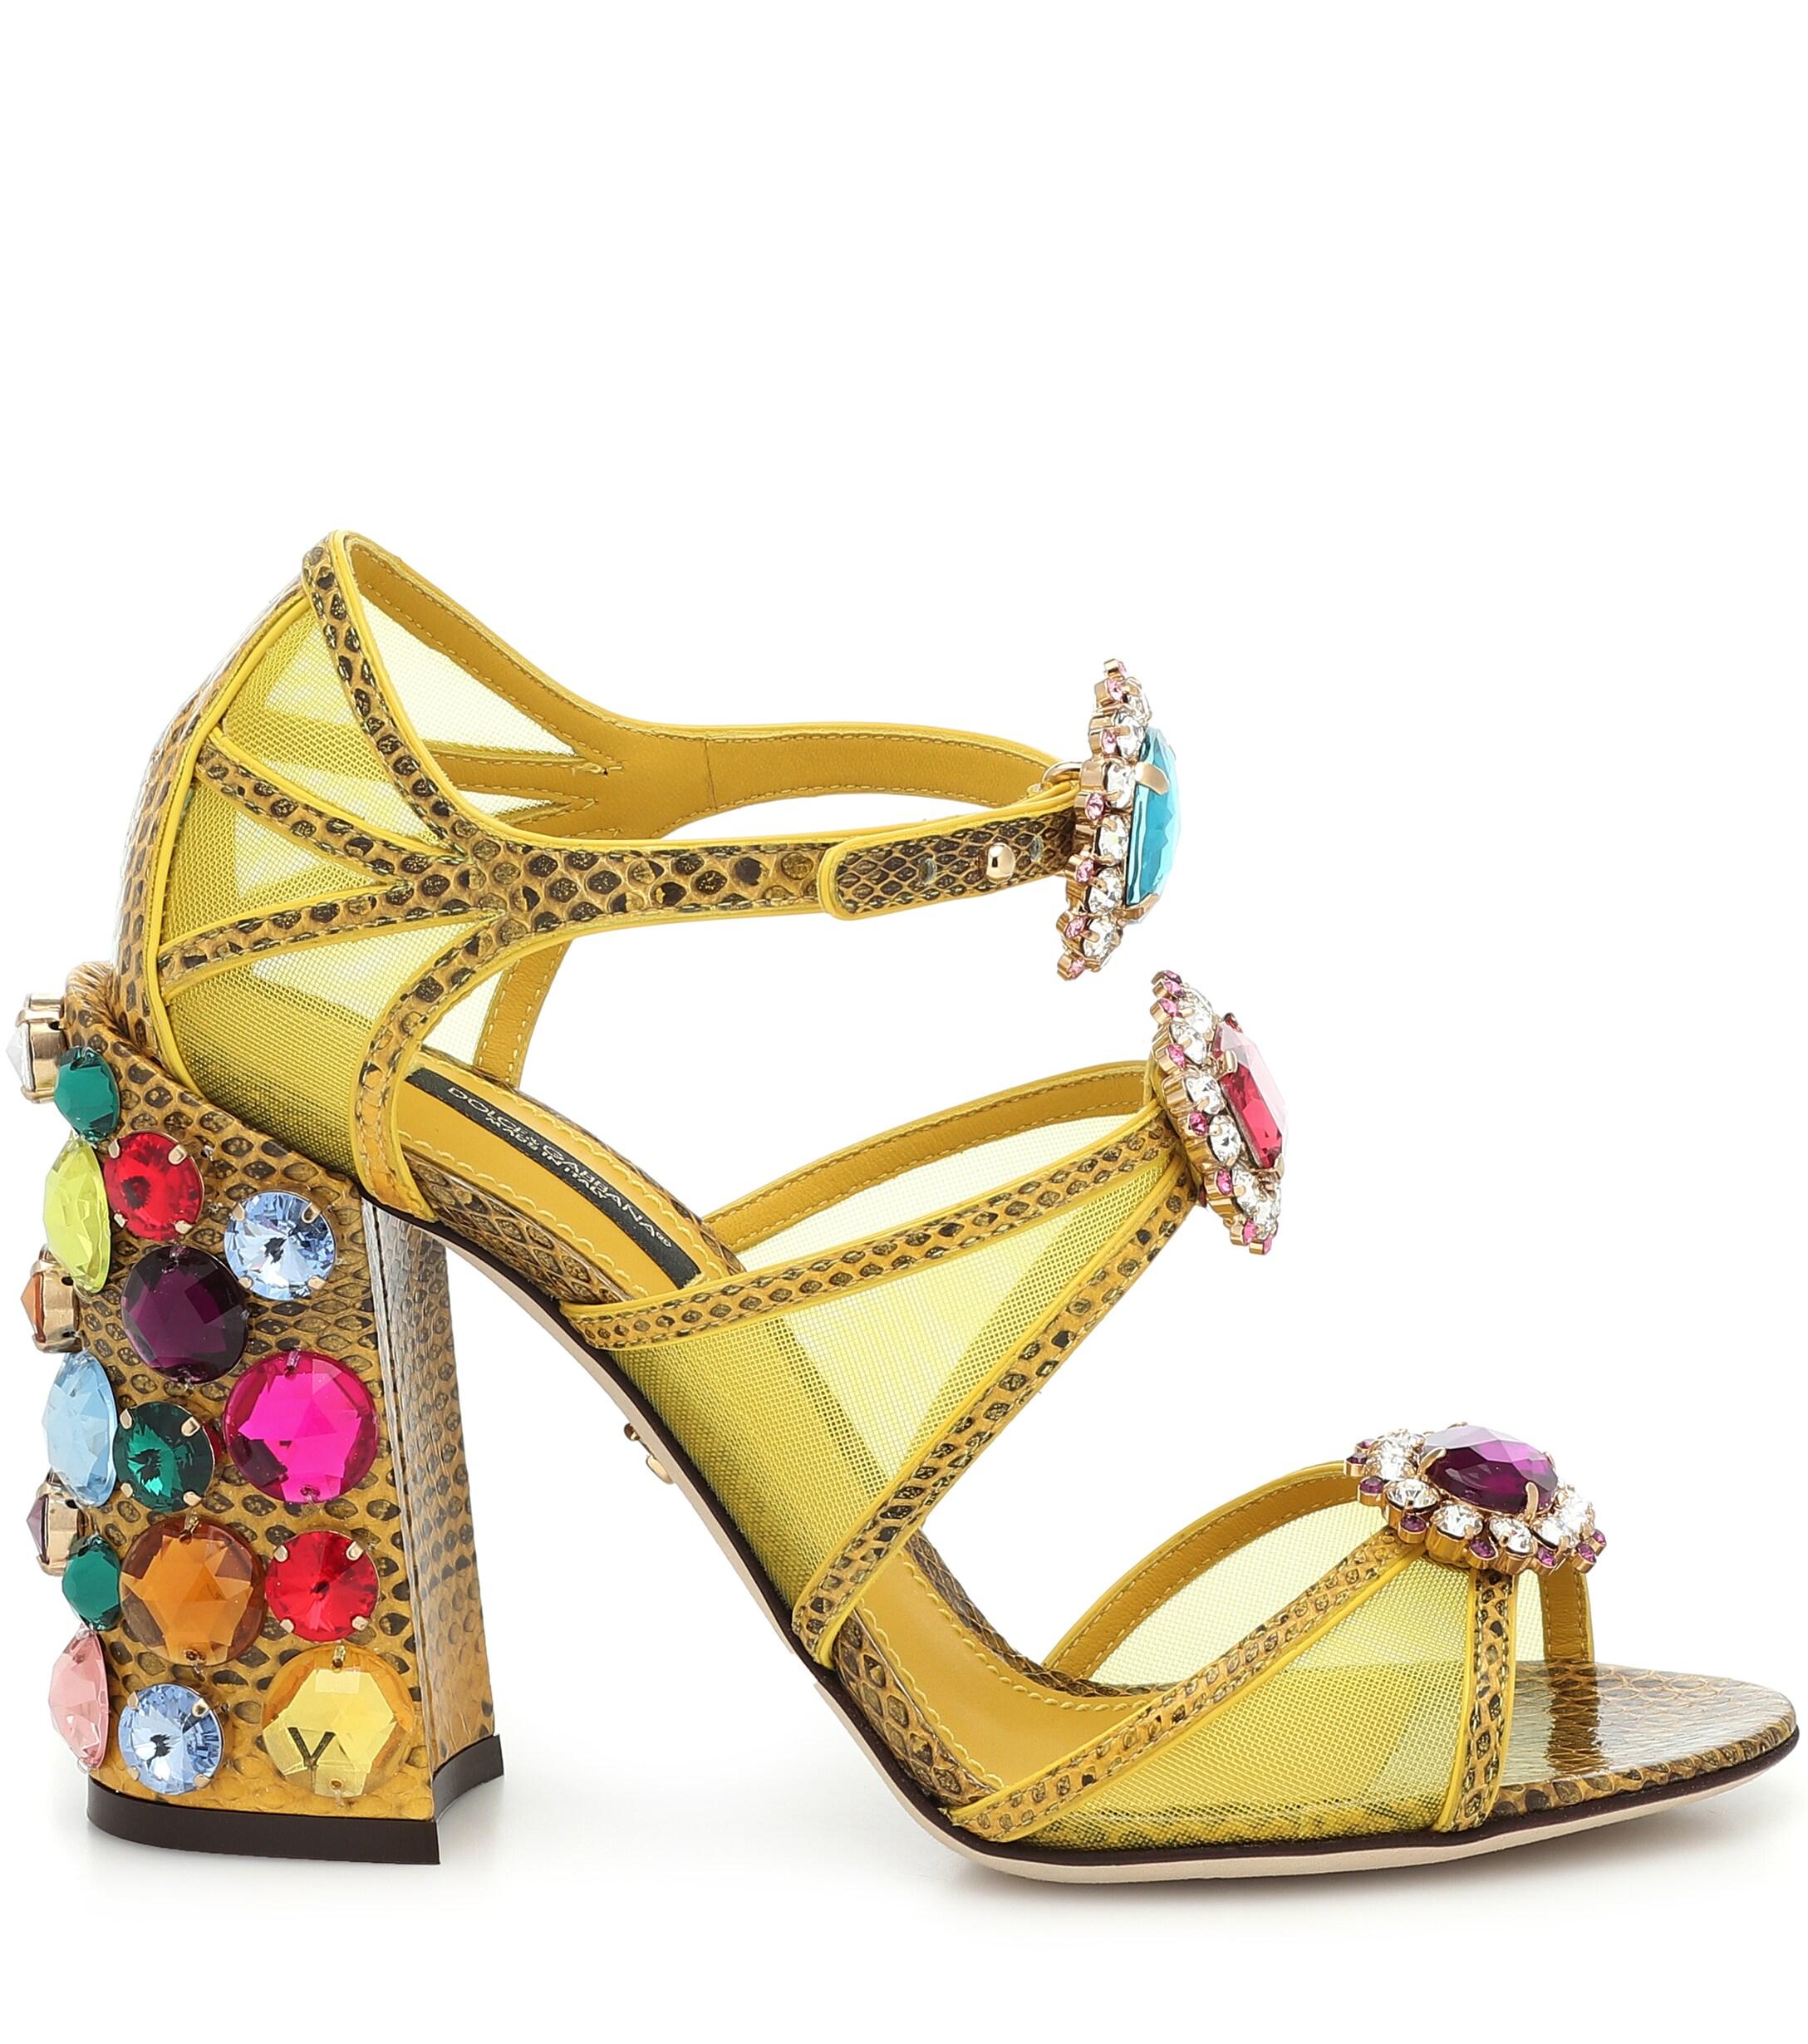 Dolce & Gabbana Keira Embellished Sandals in Gold (Metallic) - Lyst